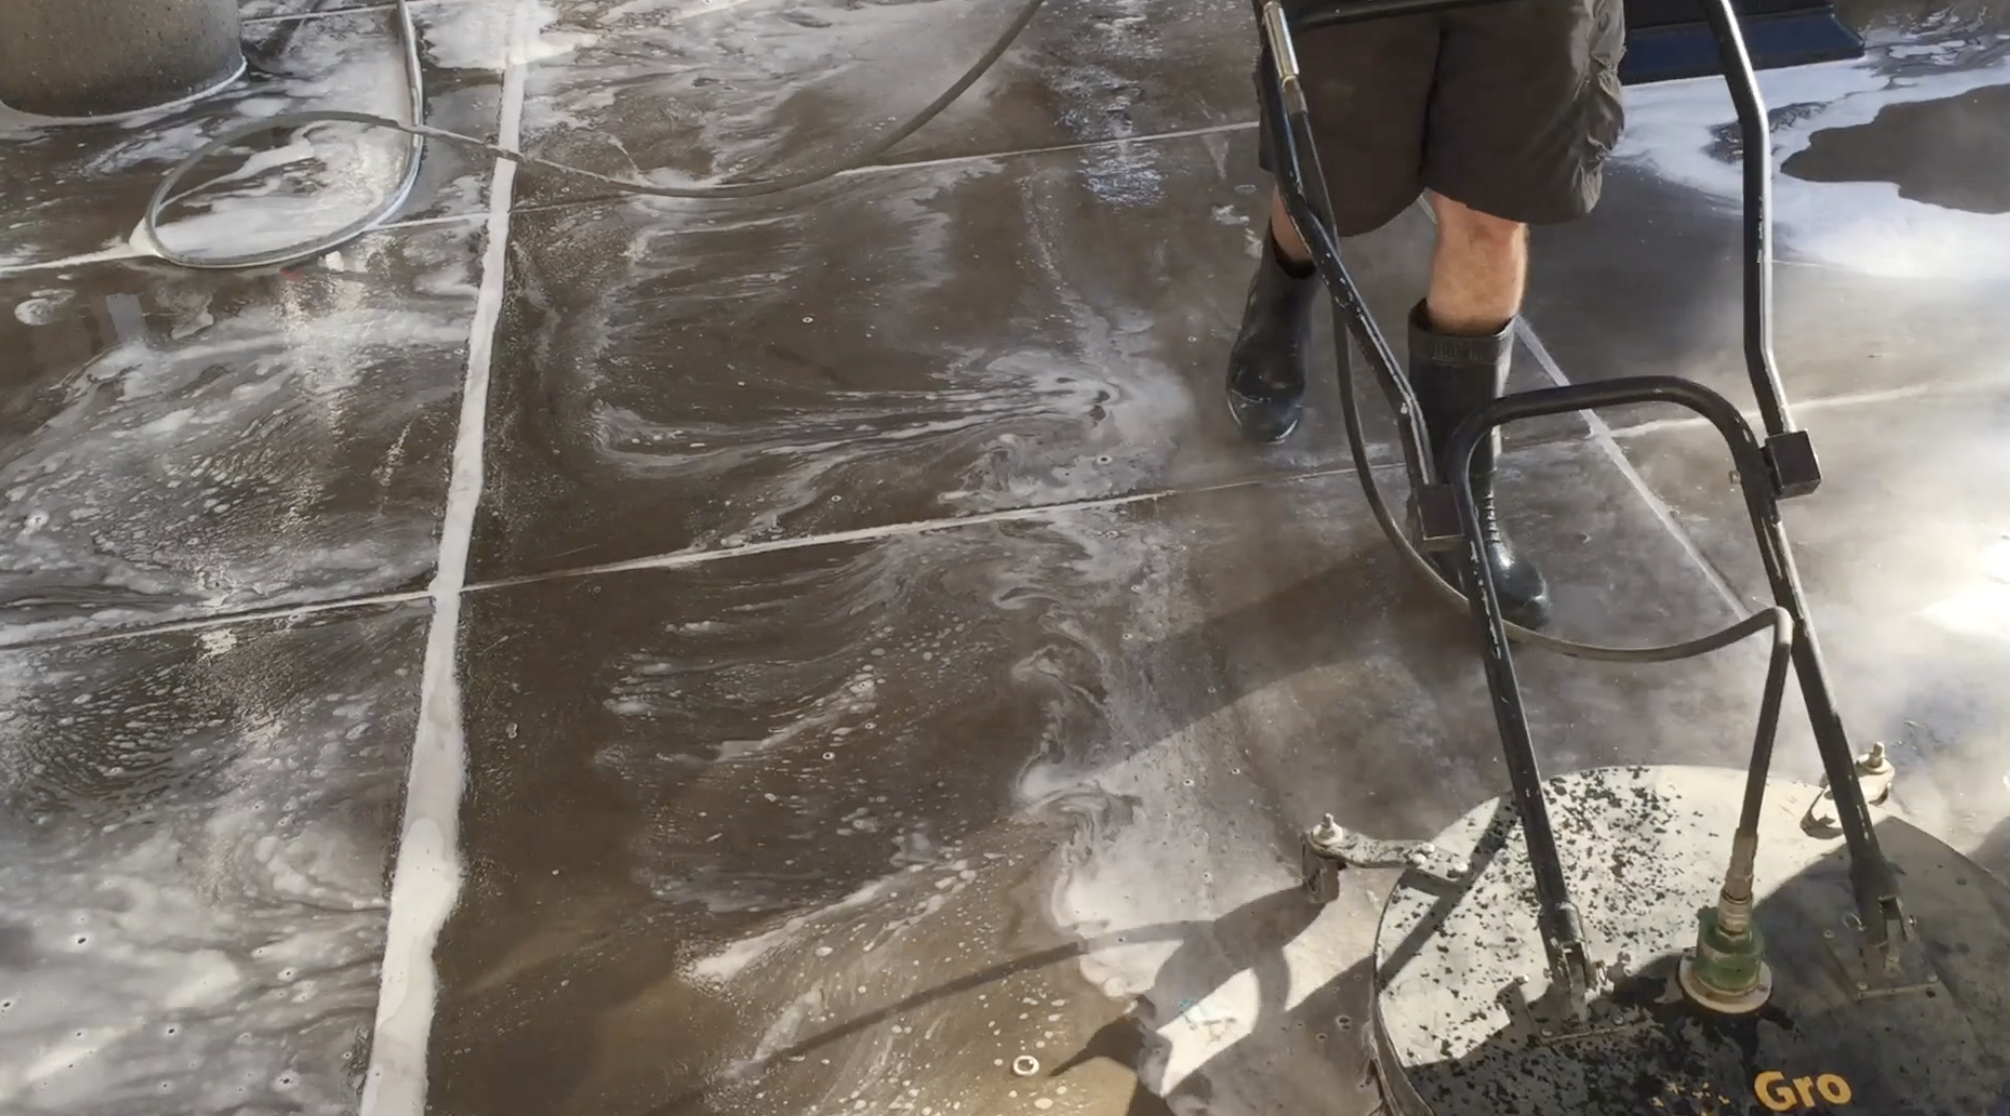 power washing sidewalk to remove gum